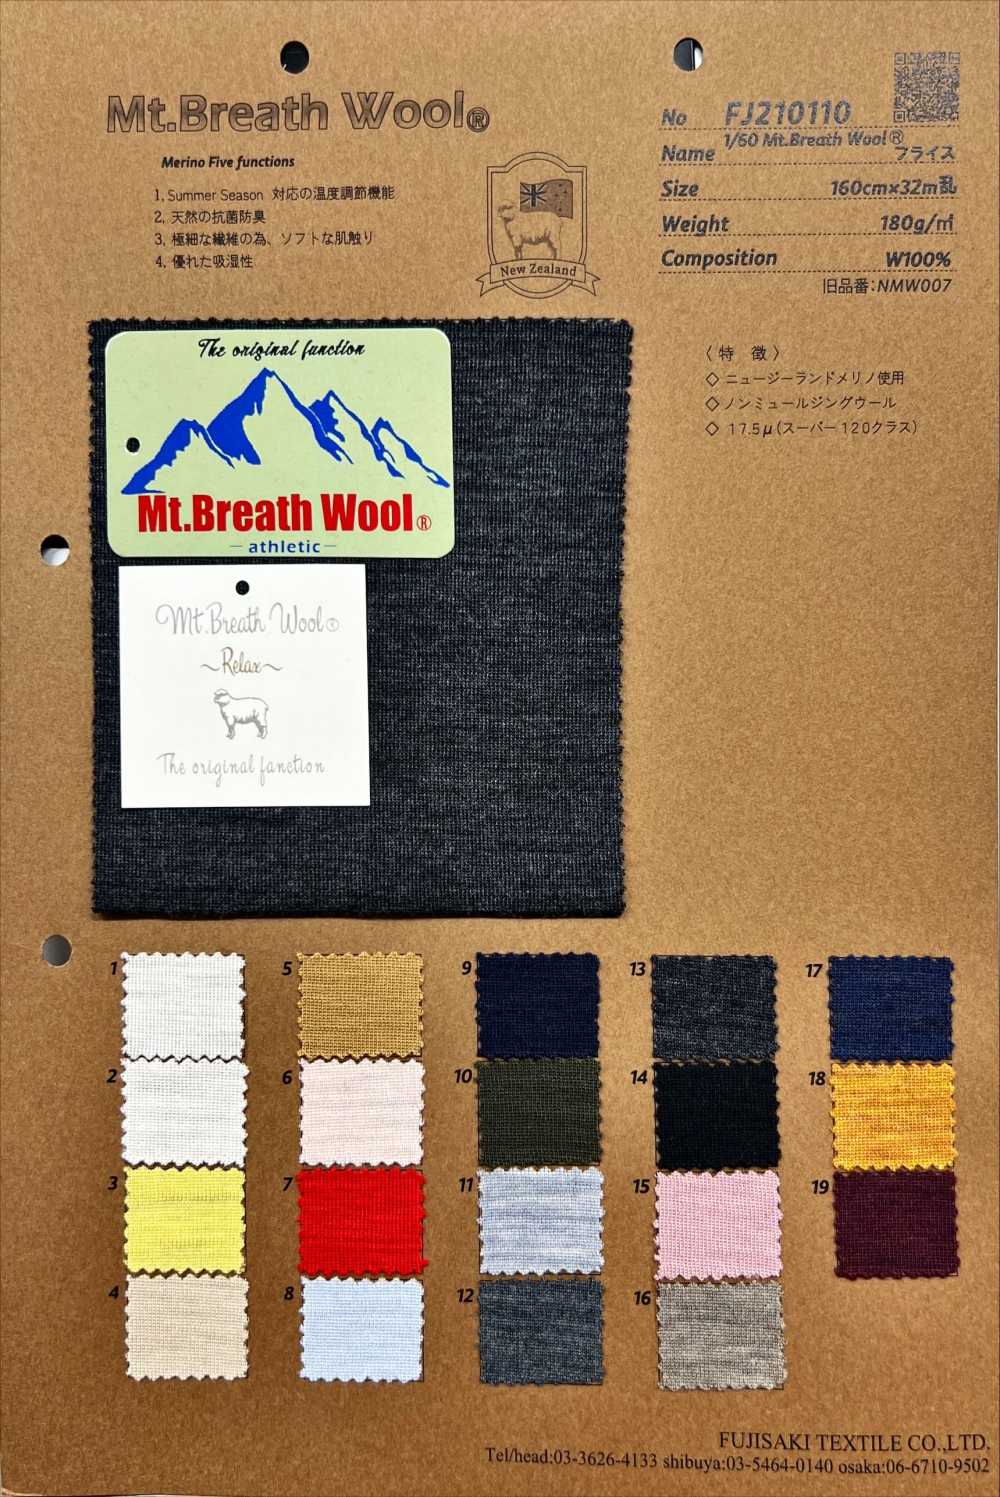 FJ210110 1/60 Mt.Breath Rundrippe Aus Wolle[Textilgewebe] Fujisaki Textile